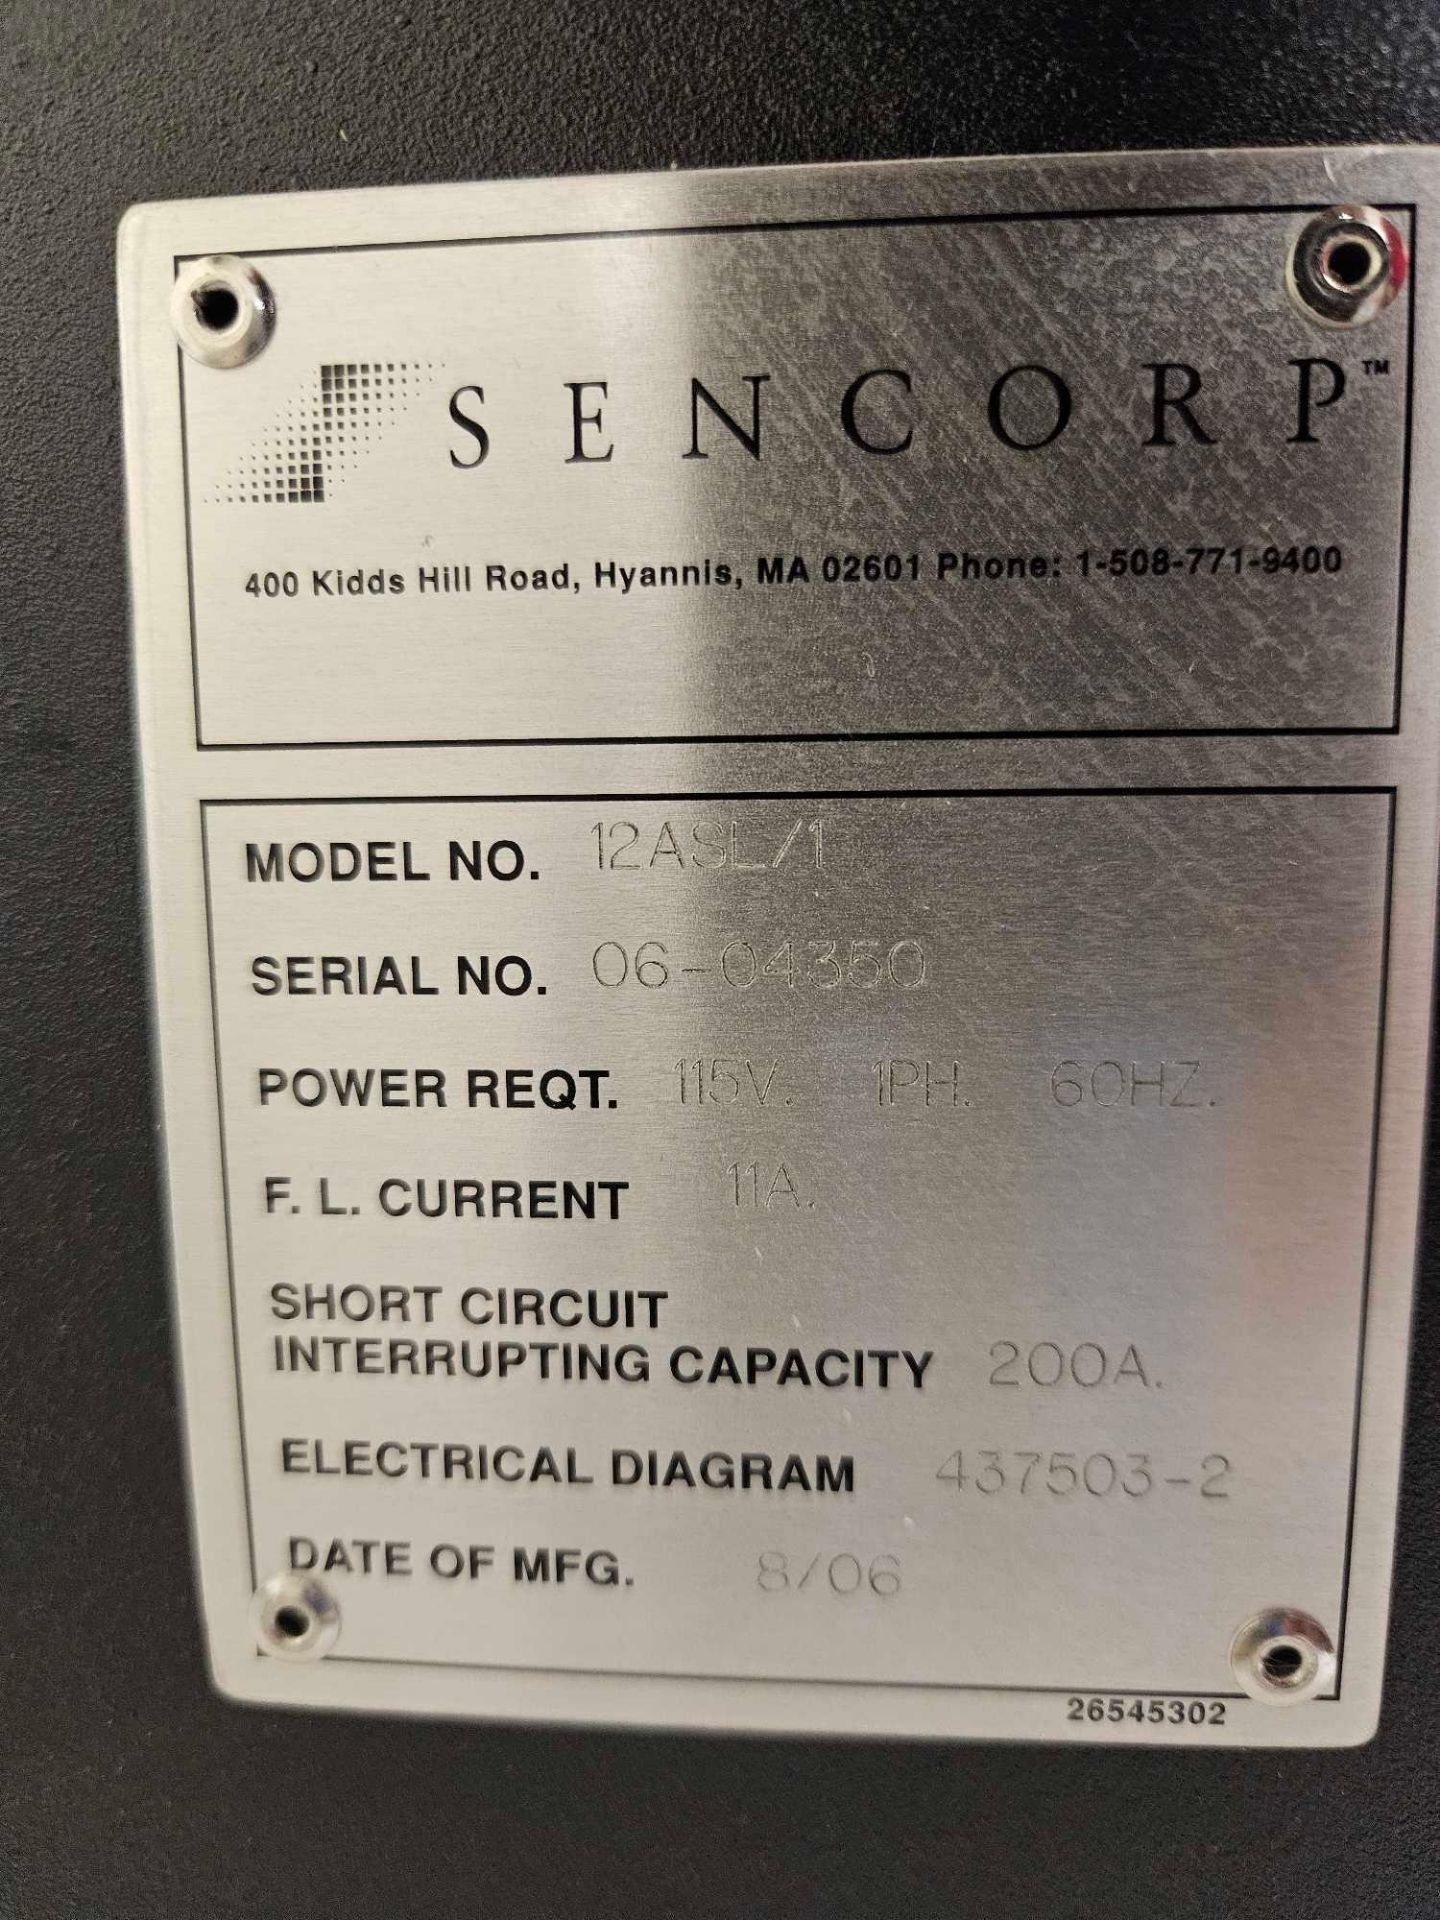 Sencorp CeraTek 12ASL/1 Laboratory Heat Sealer - Image 5 of 10